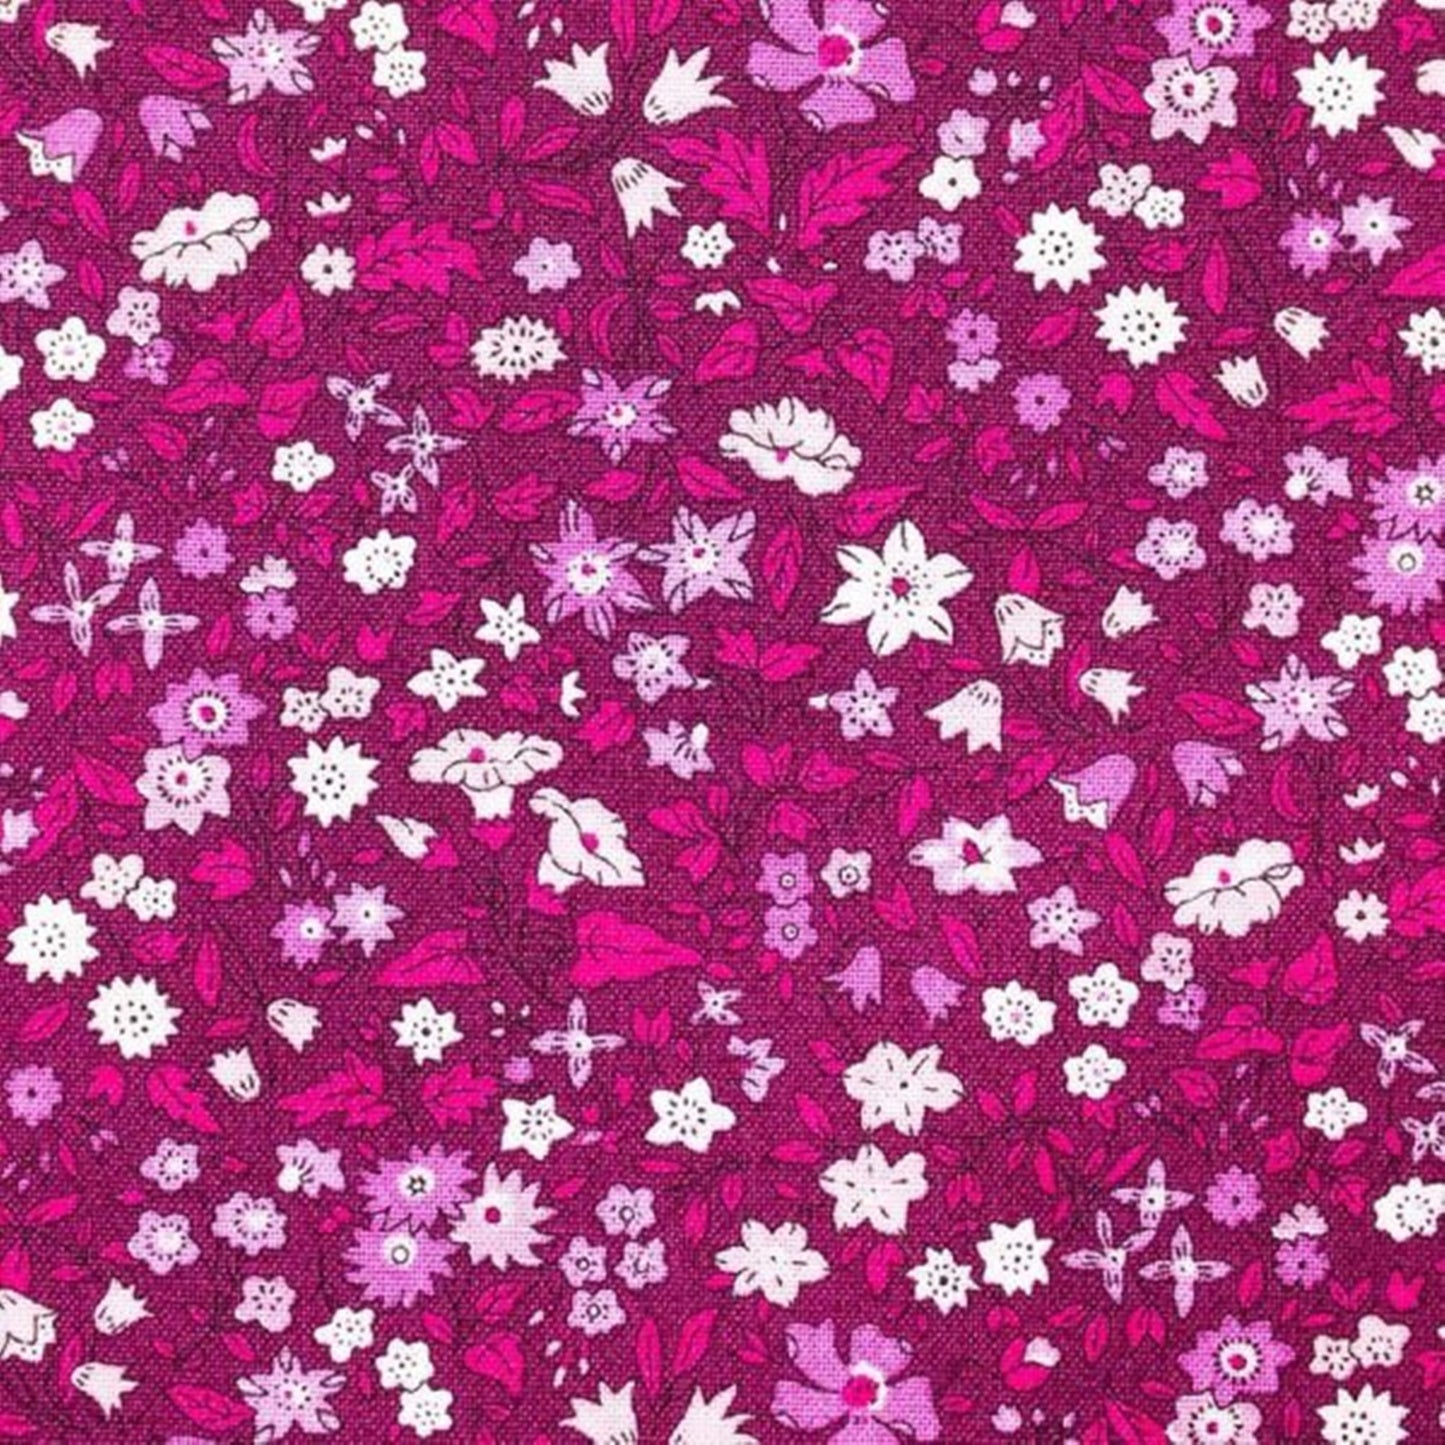 Liberty Flower Show Botanical Jewel Ava May cotton quilt fabric